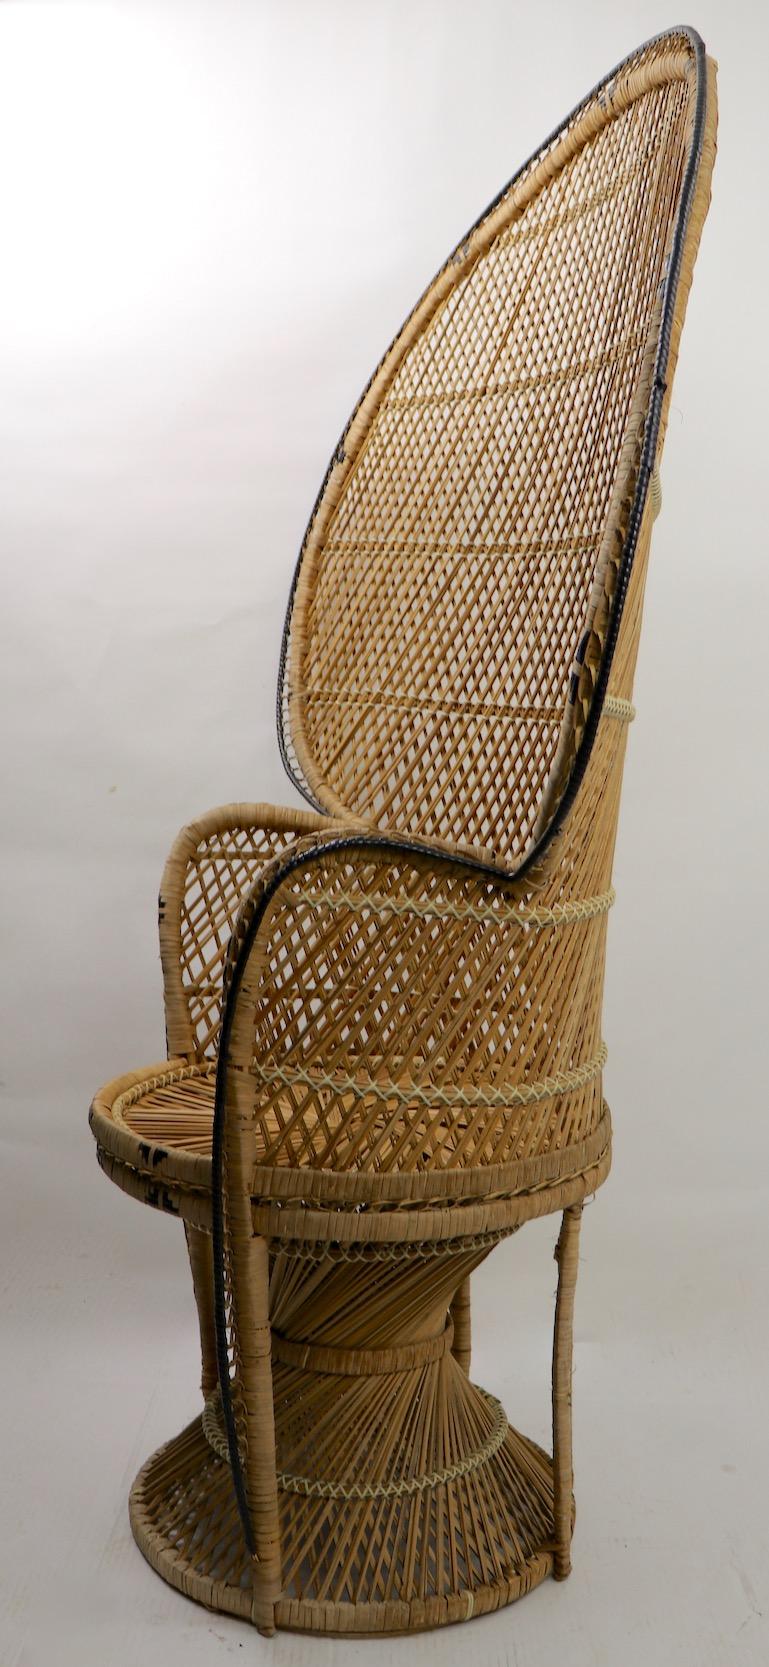 Woven Wicker Peacock Chair